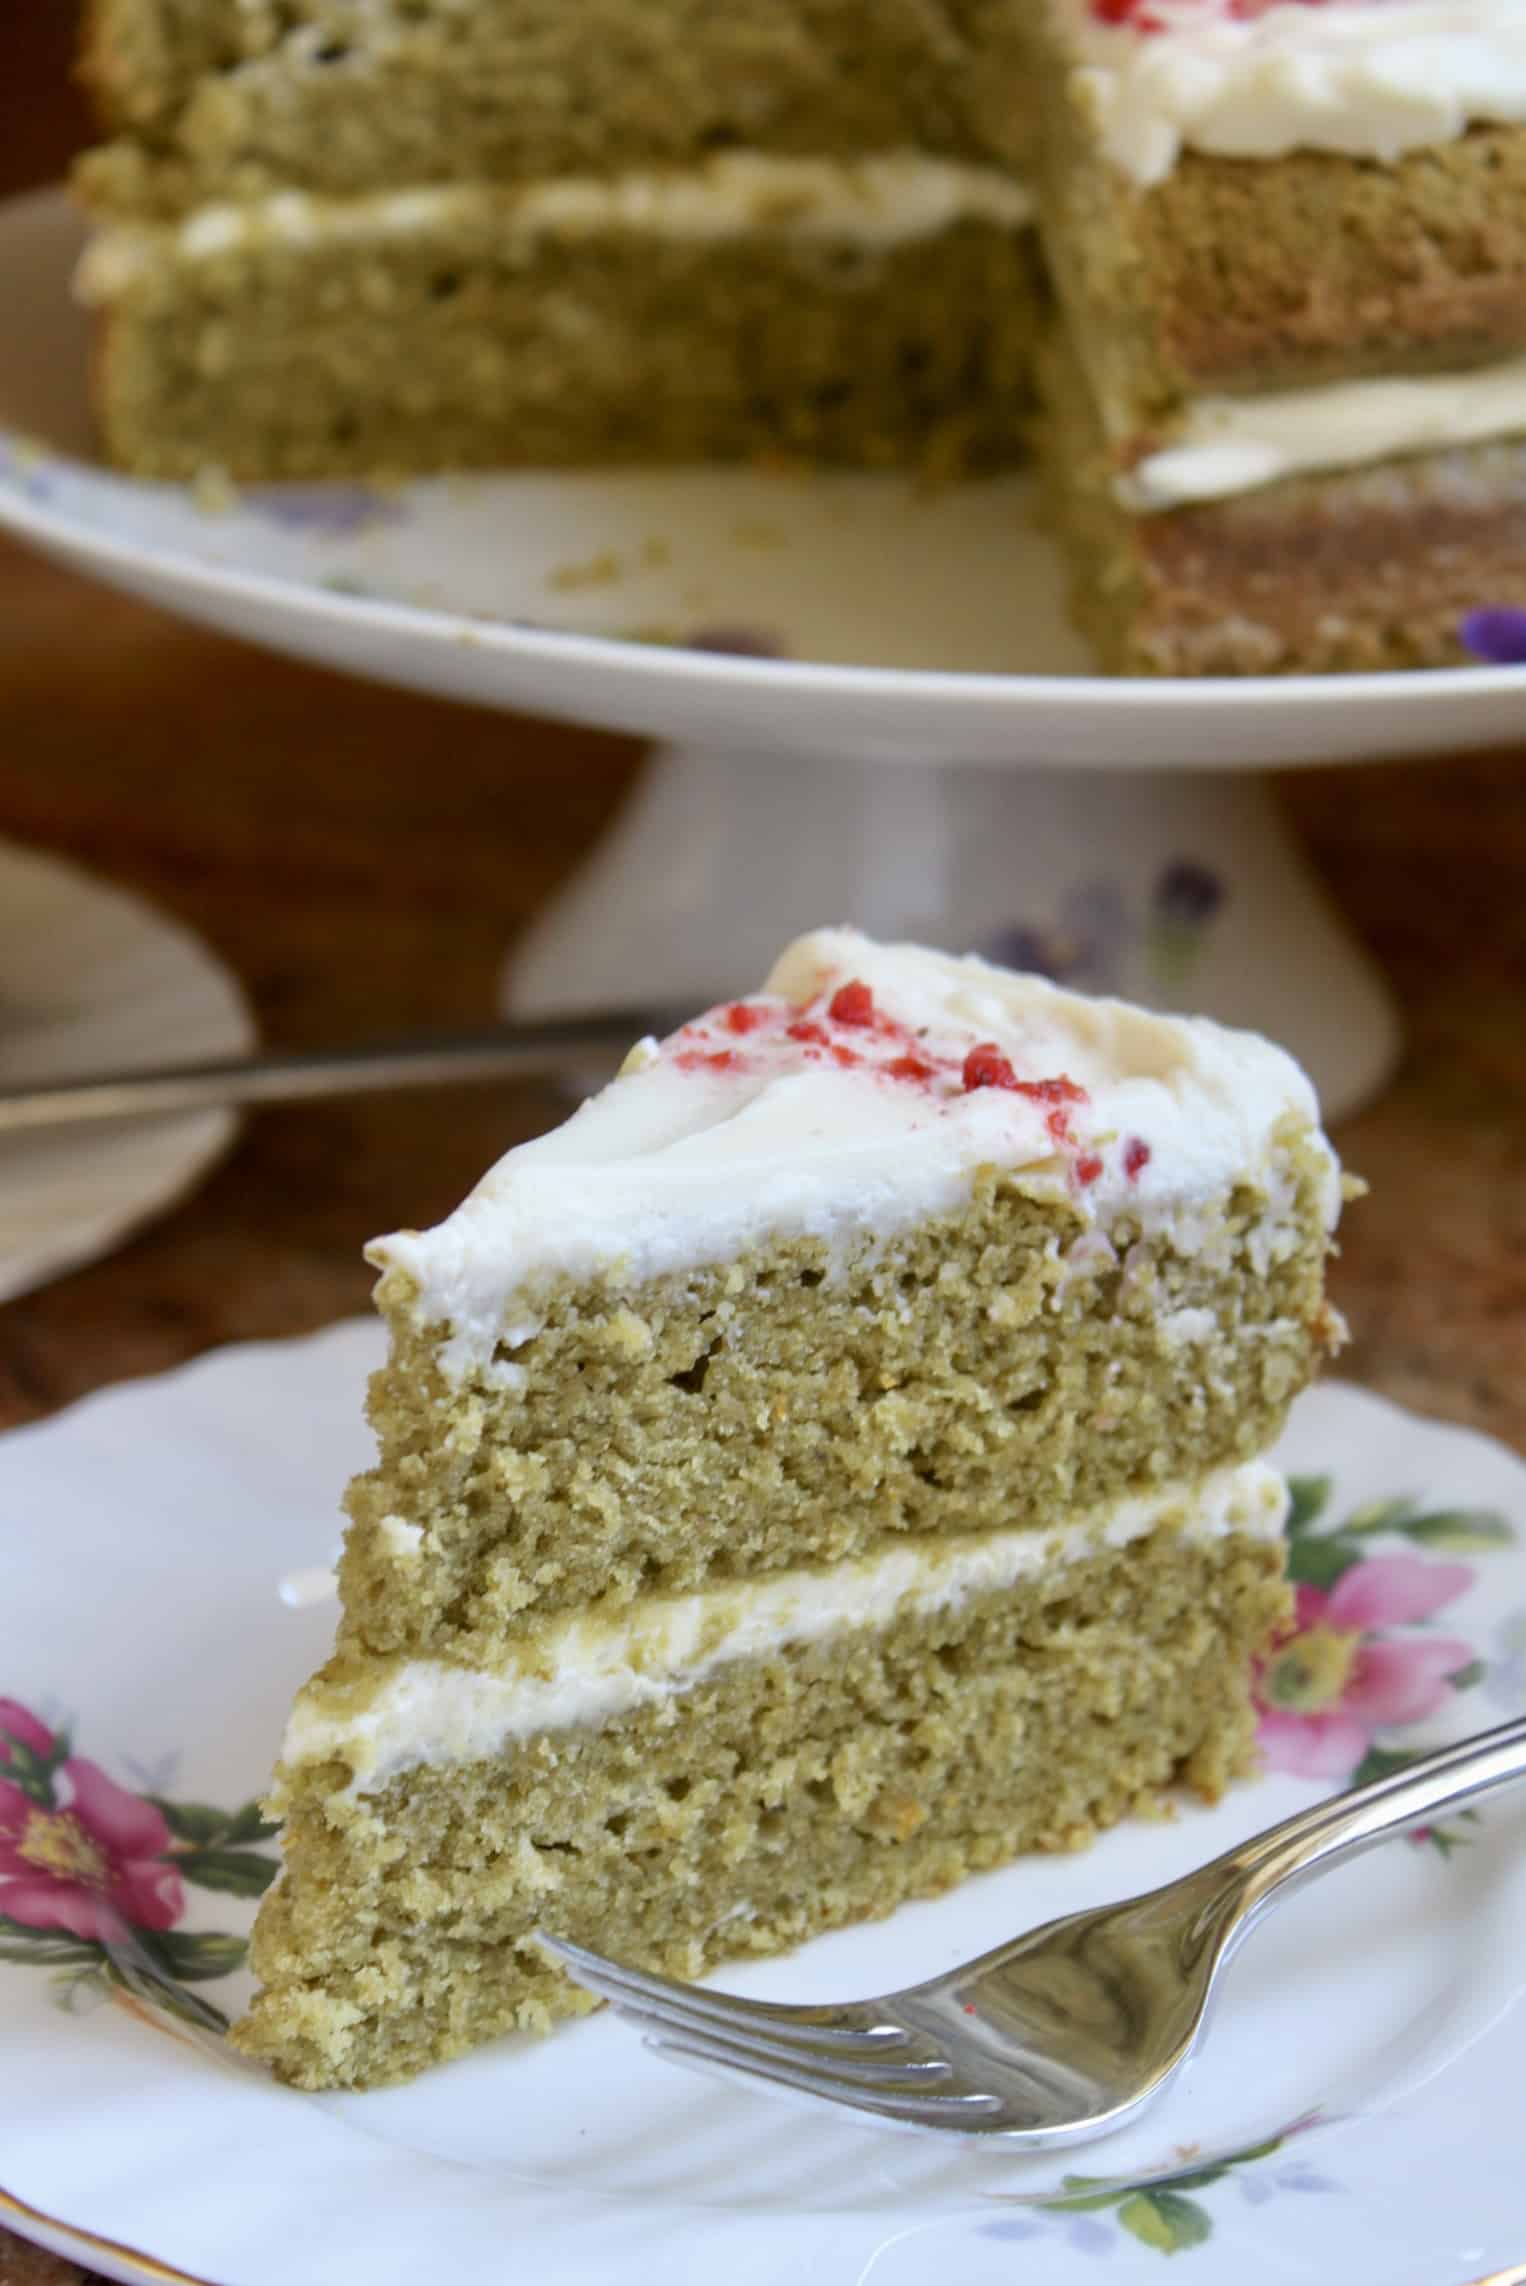 green cake slice on plate